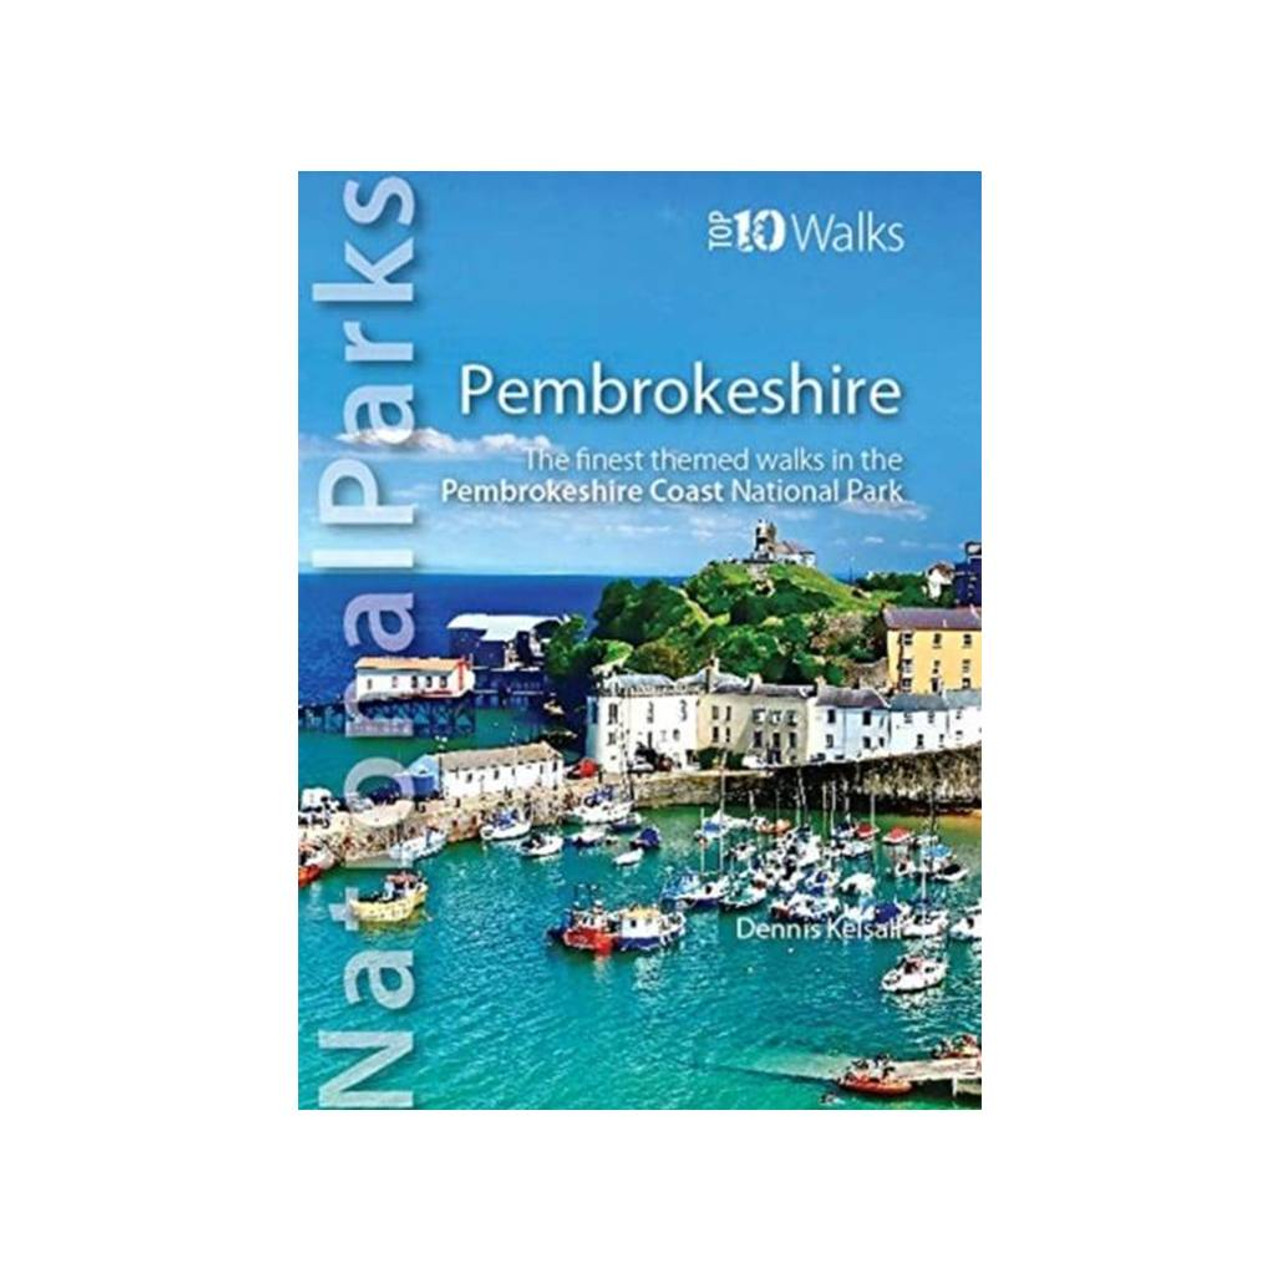 National Parks - Top 10 Walks: Pembrokeshire